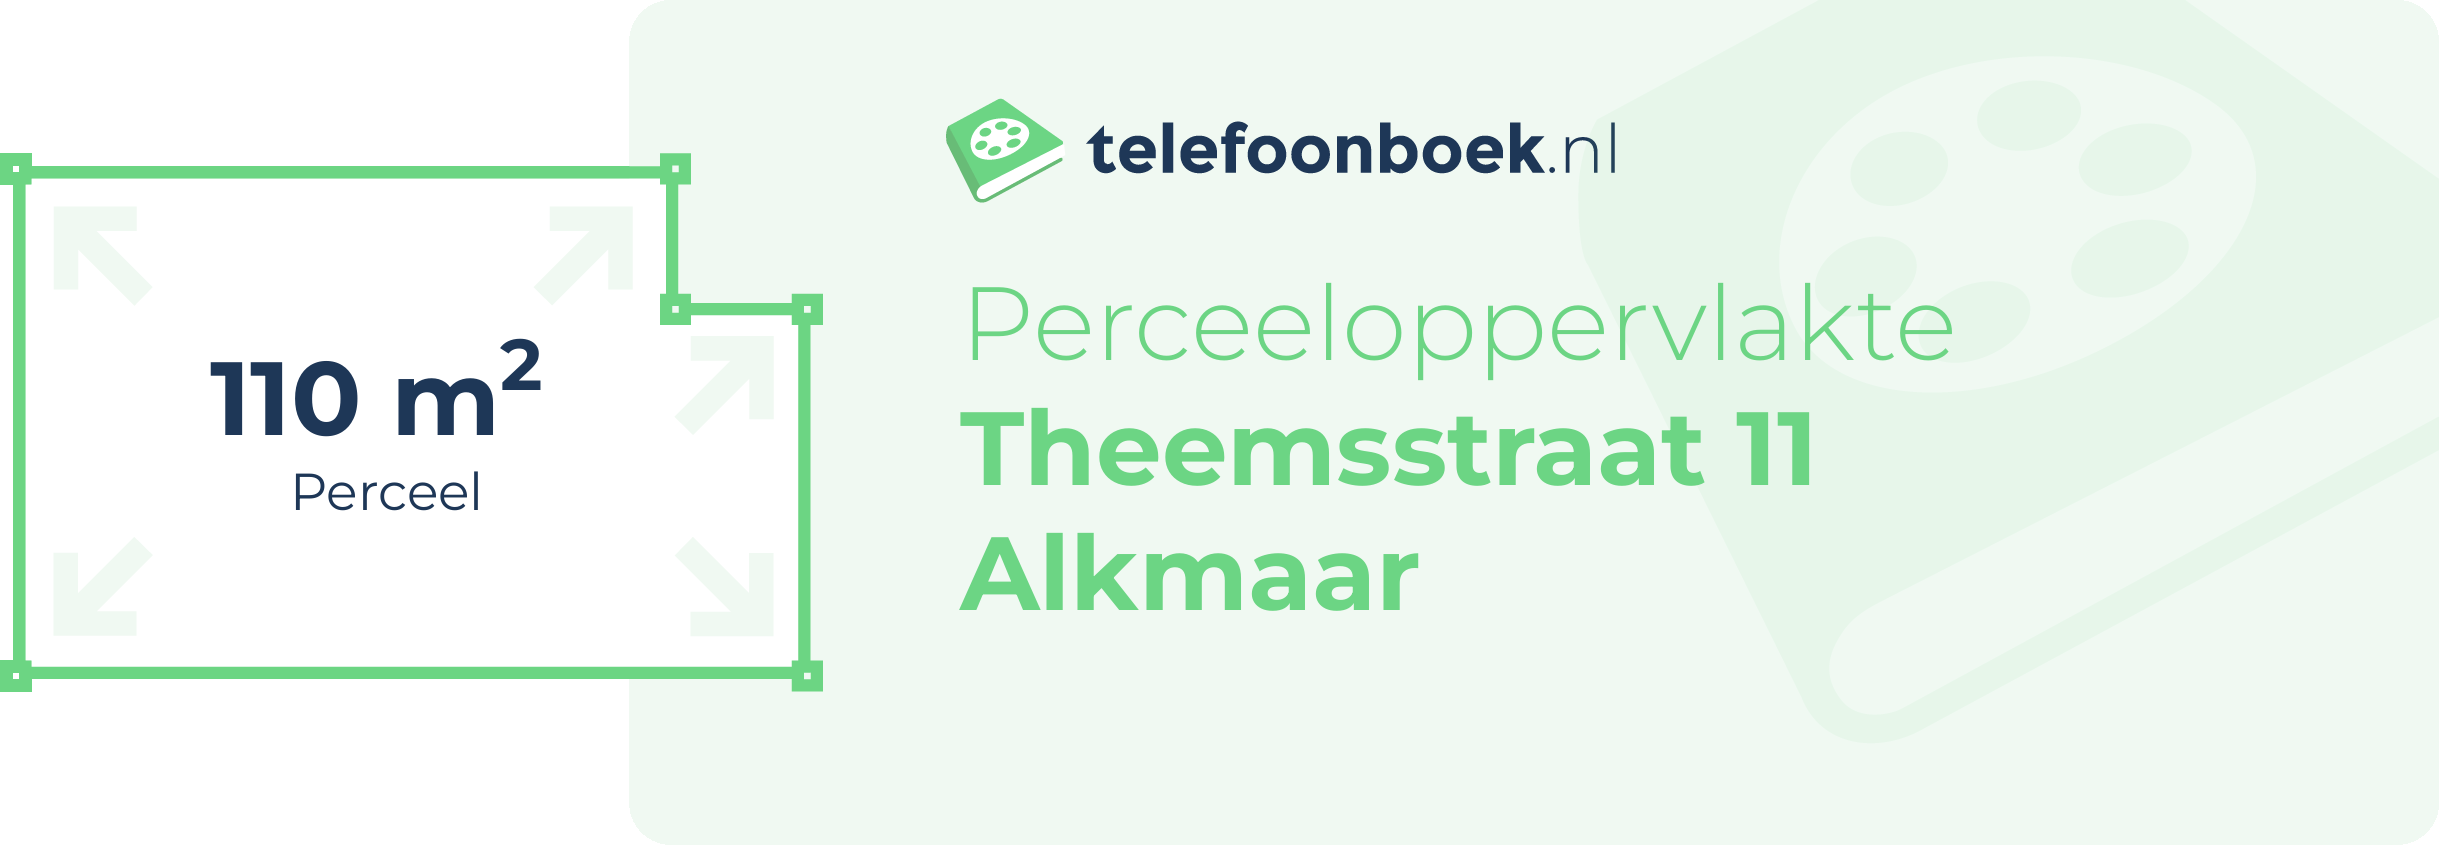 Perceeloppervlakte Theemsstraat 11 Alkmaar